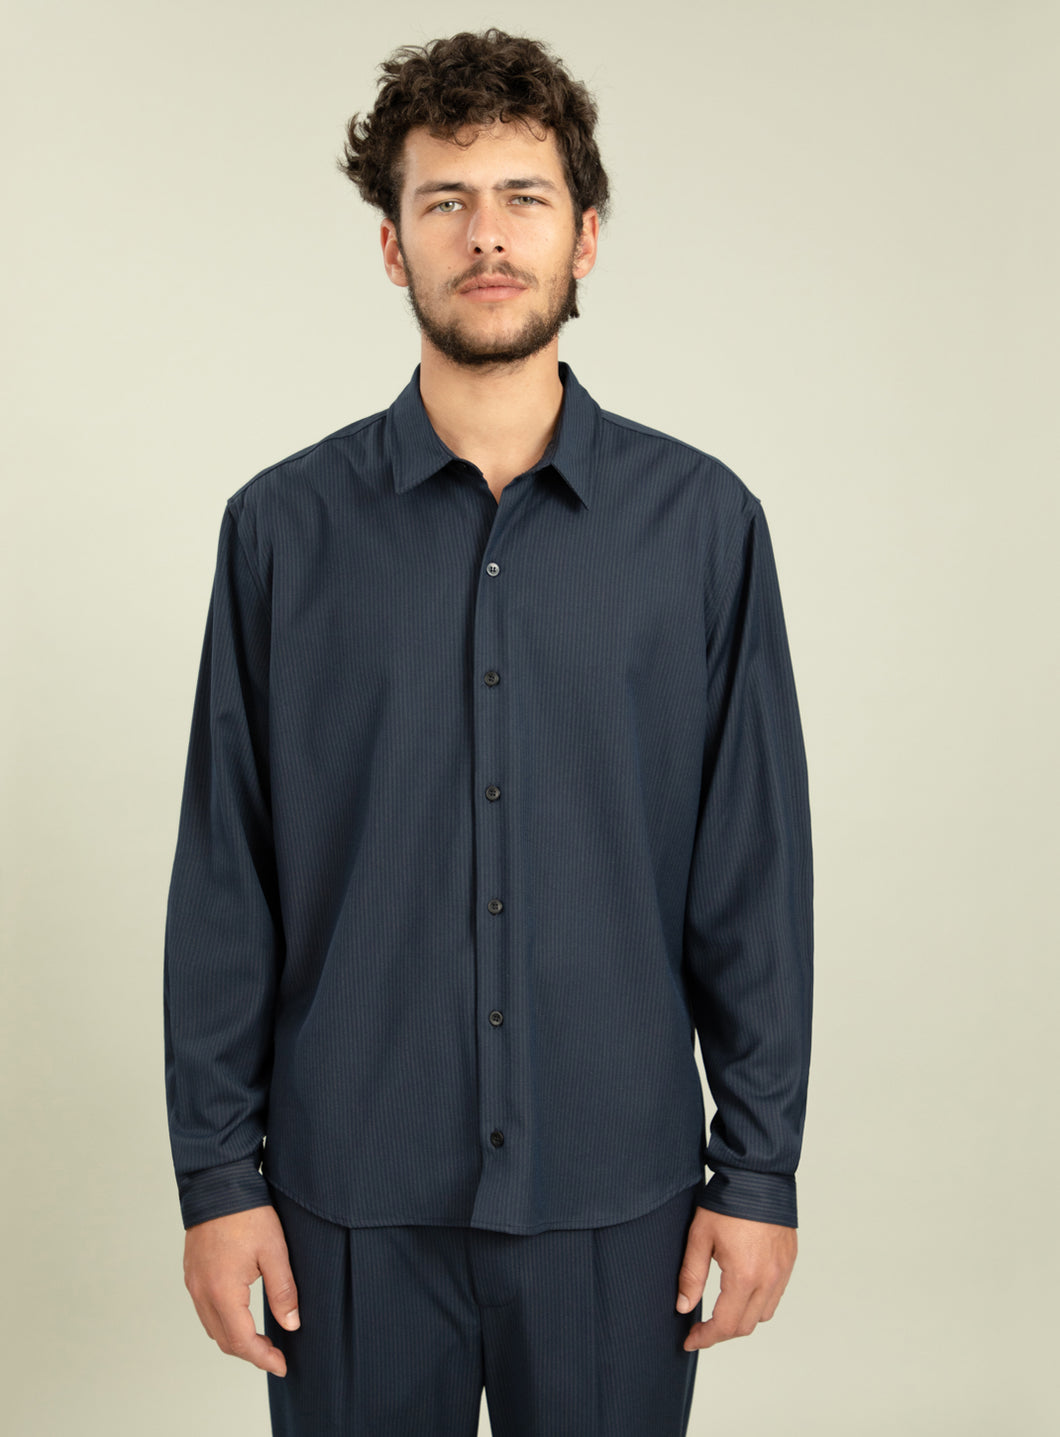 Classic Collar Shirt in Navy Fine Stripe Serge Fabric